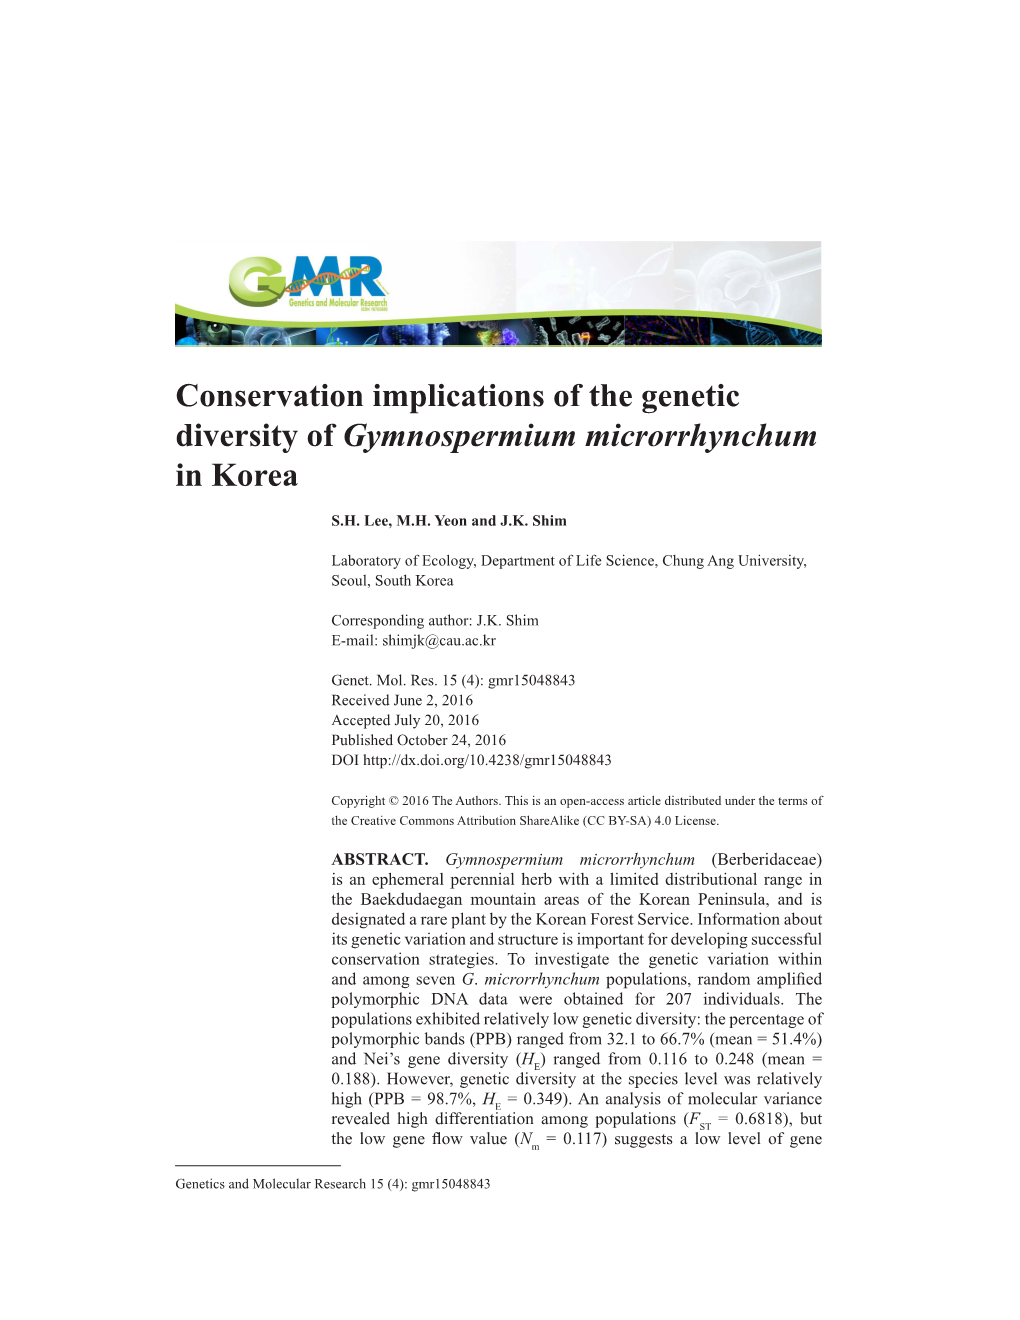 Conservation Implications of the Genetic Diversity of Gymnospermium Microrrhynchum in Korea